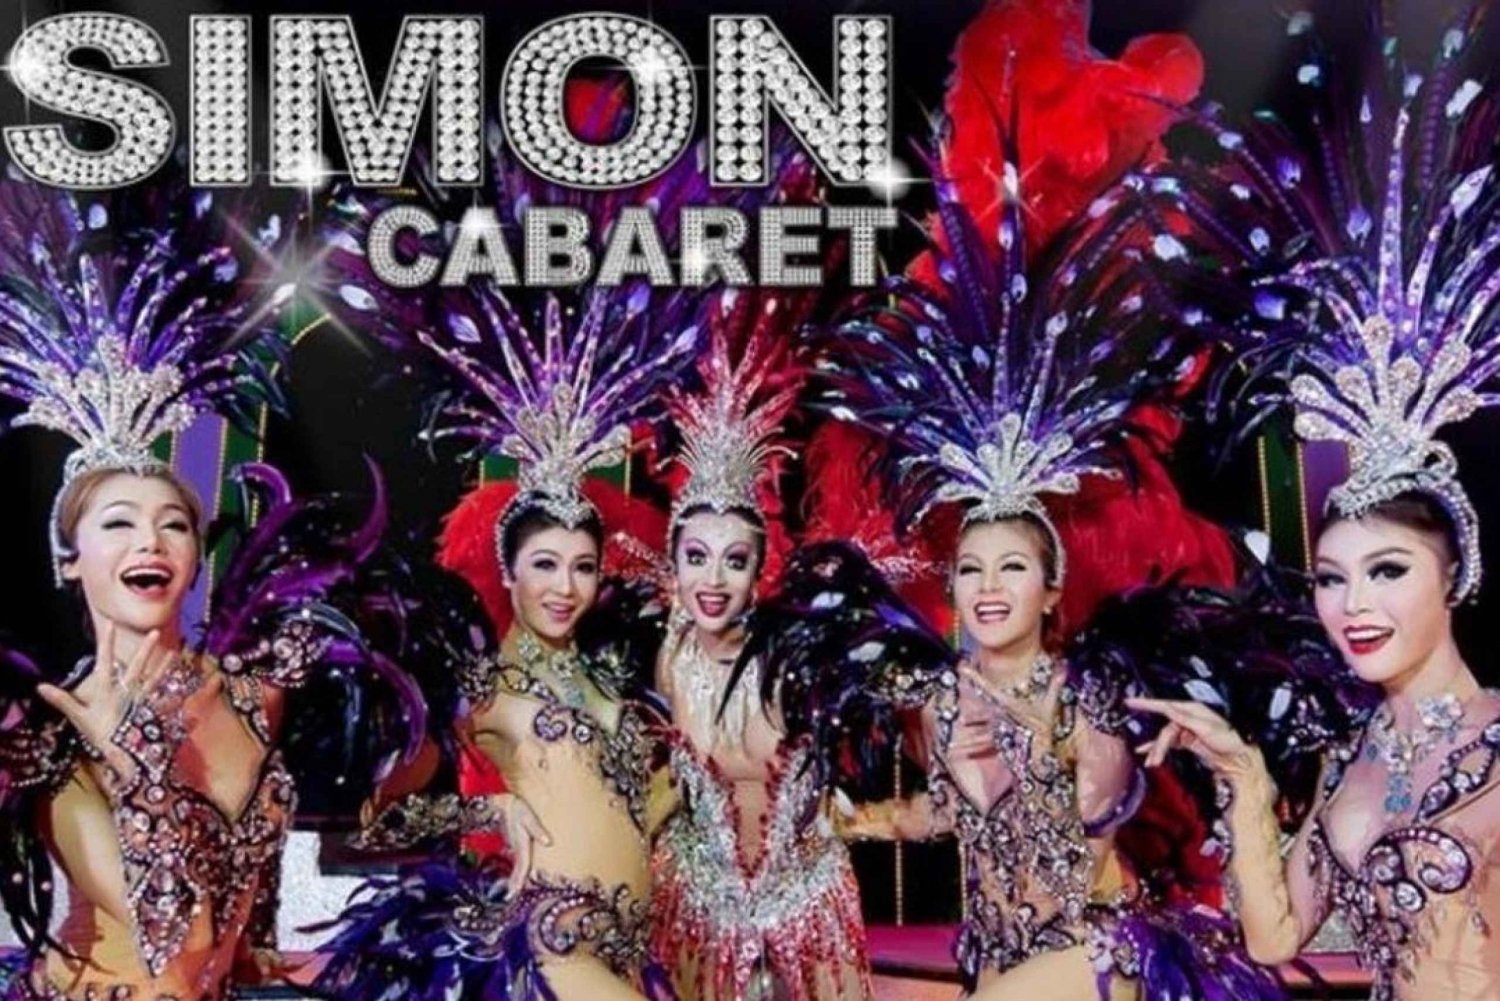 Phuket: Simon Cabaret Show - bilet wstępu z transportem